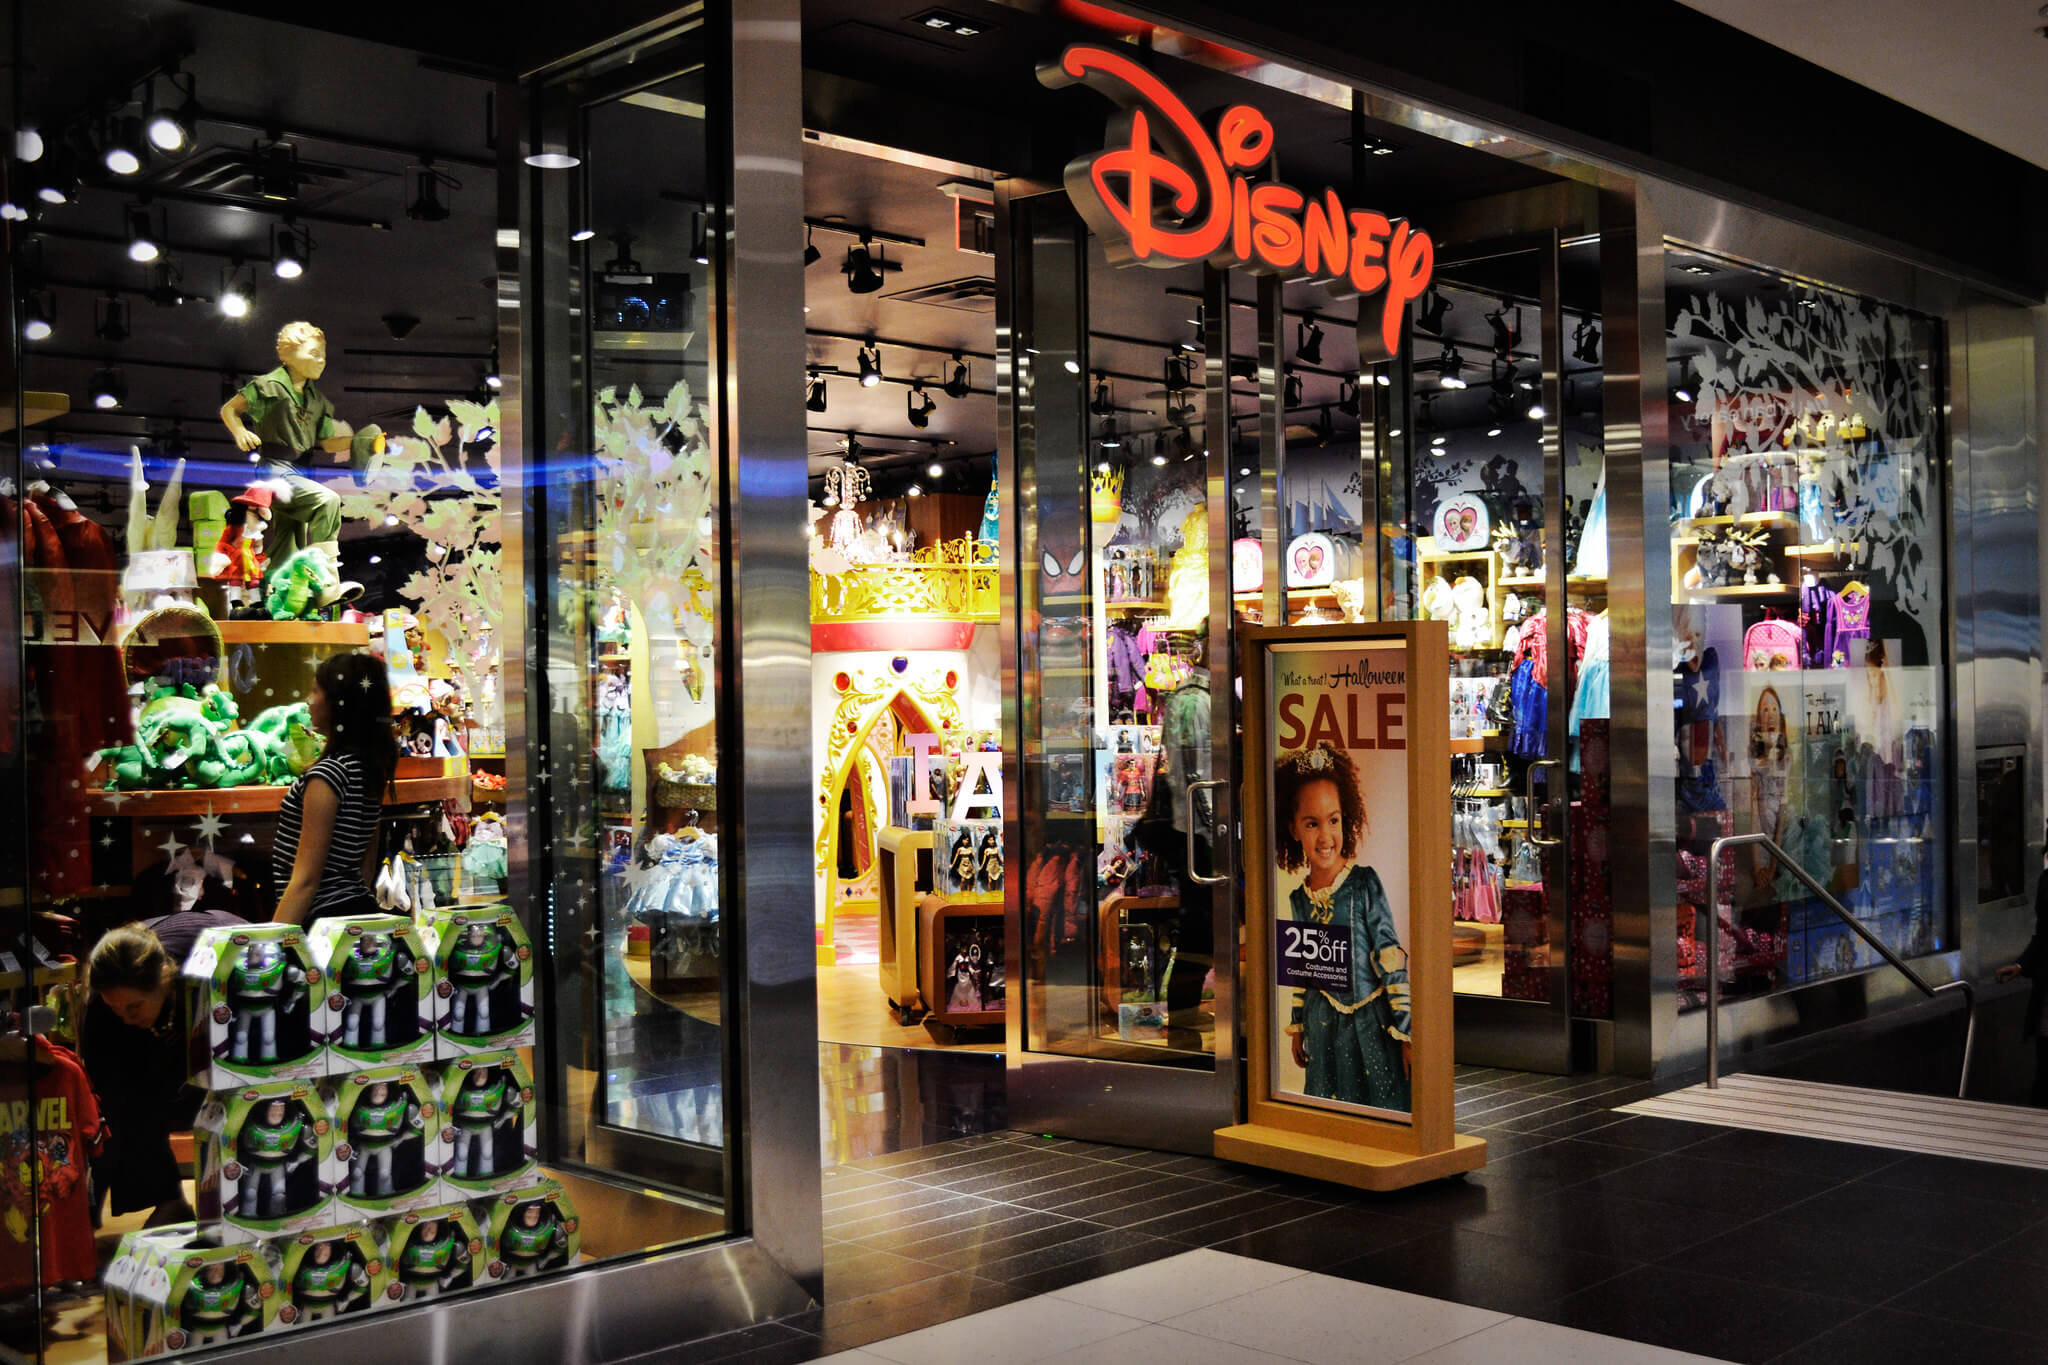 Disney Store Canada